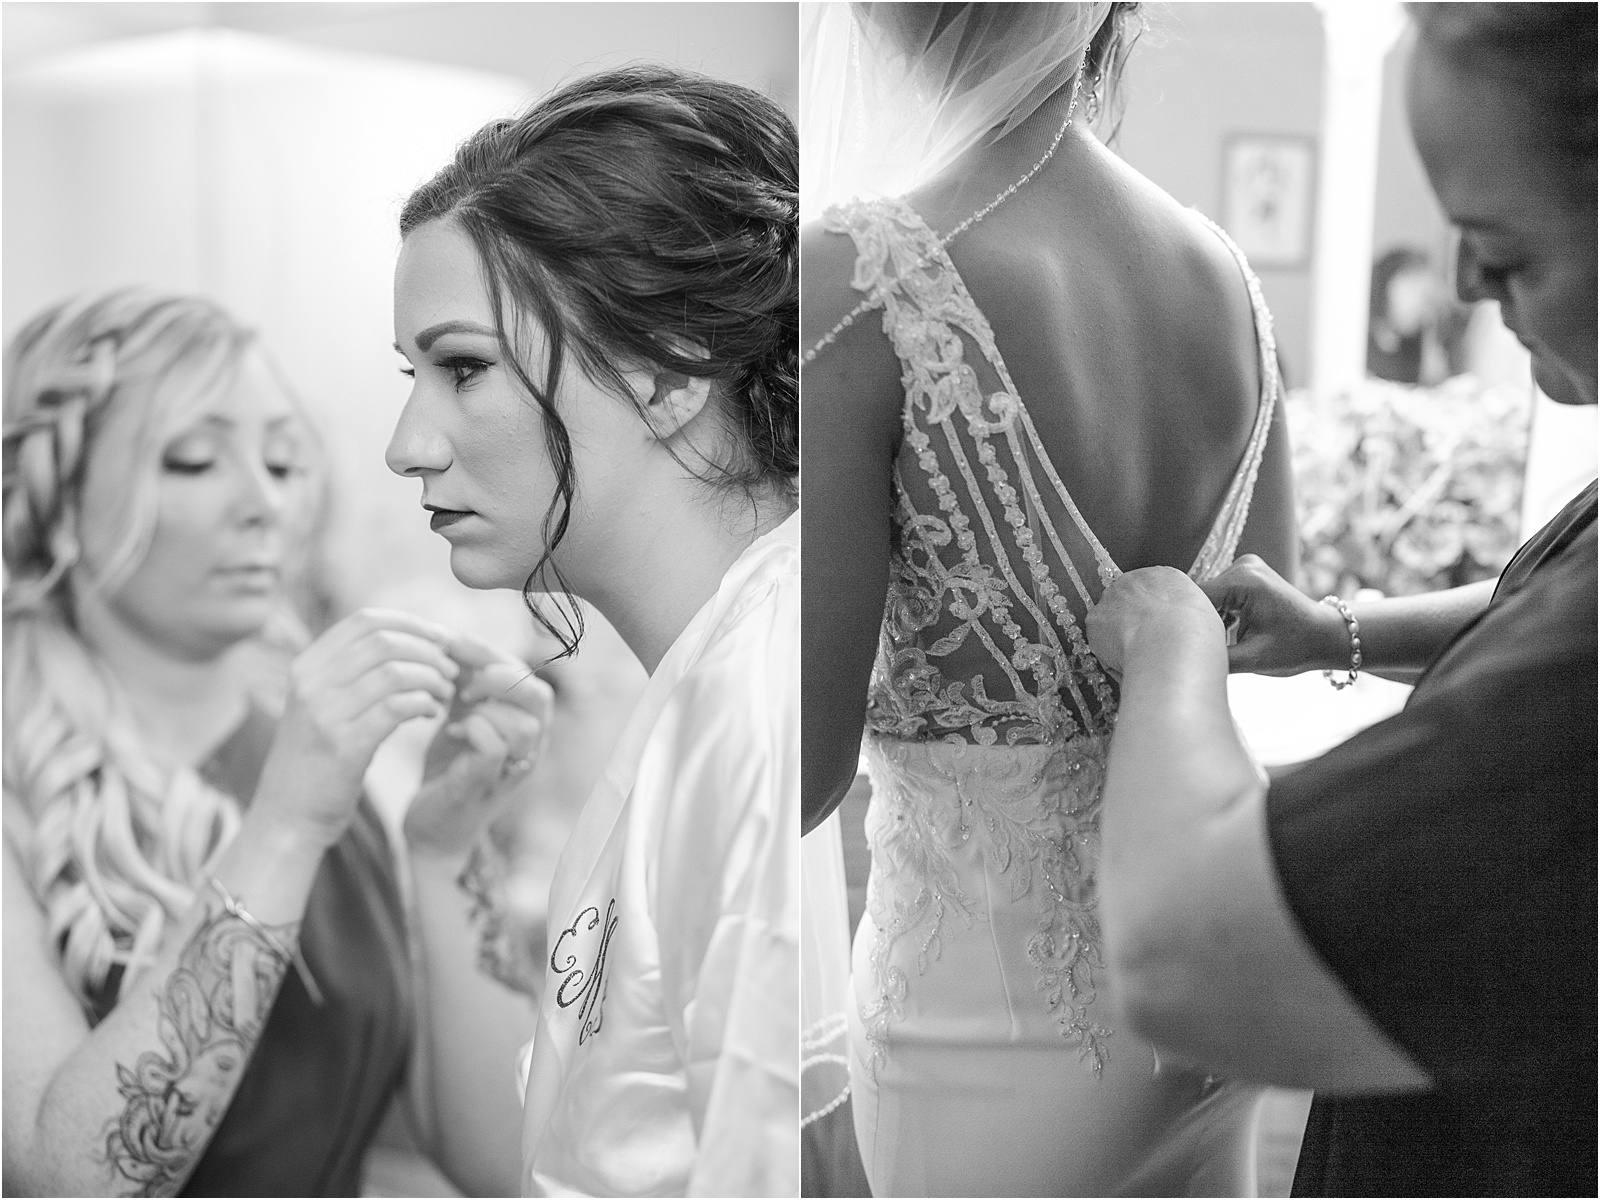 Women helping a bride get into her dress